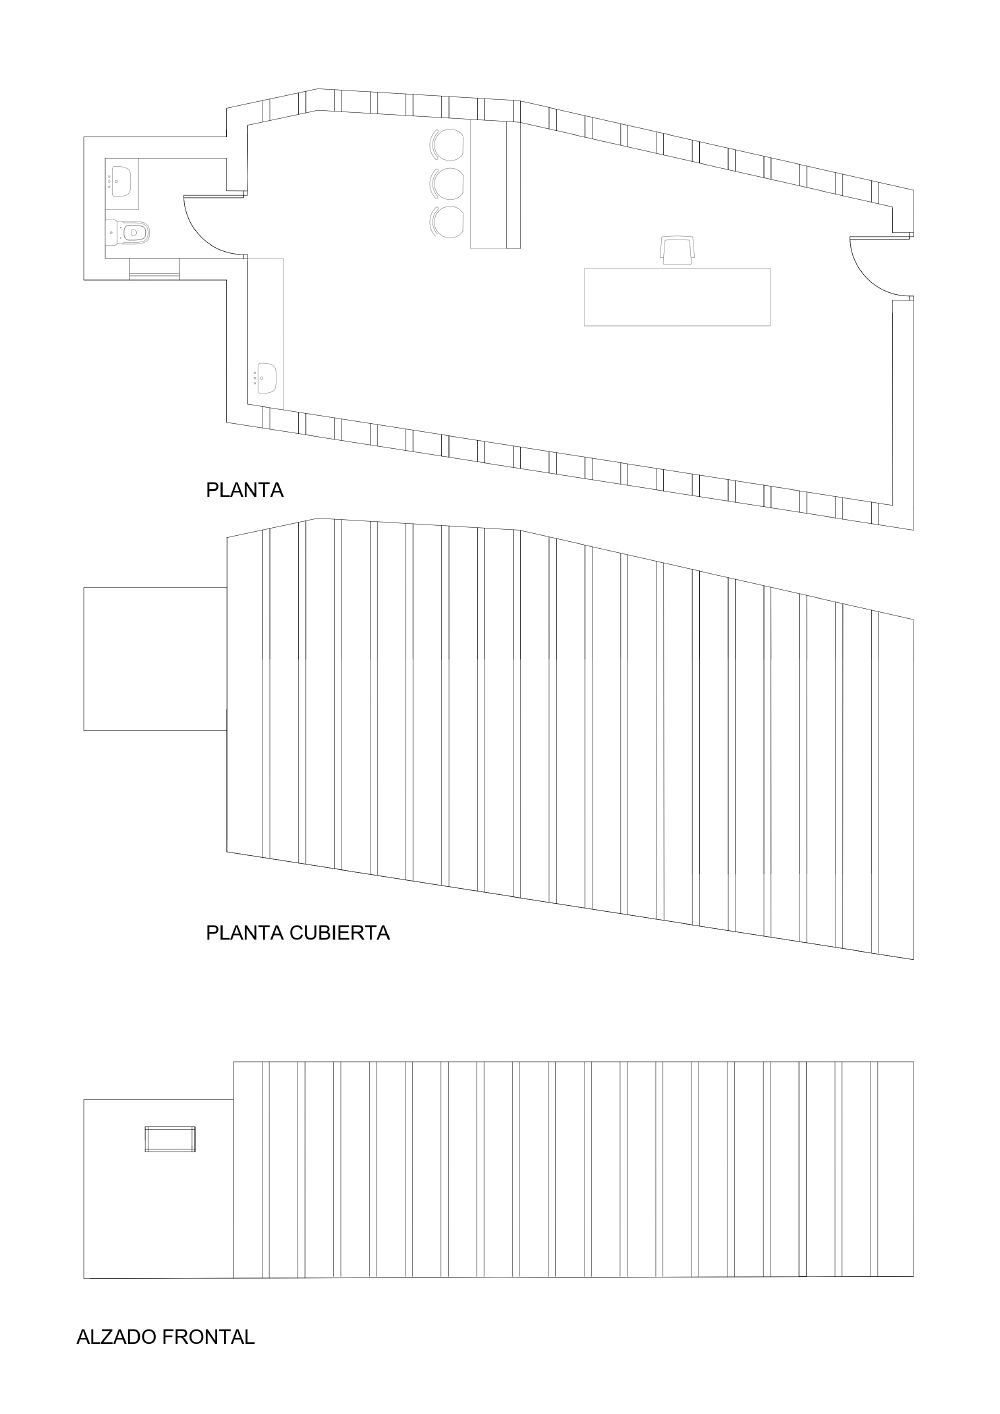 Plantaspabellon-Modelo (2) page-0001.jpg